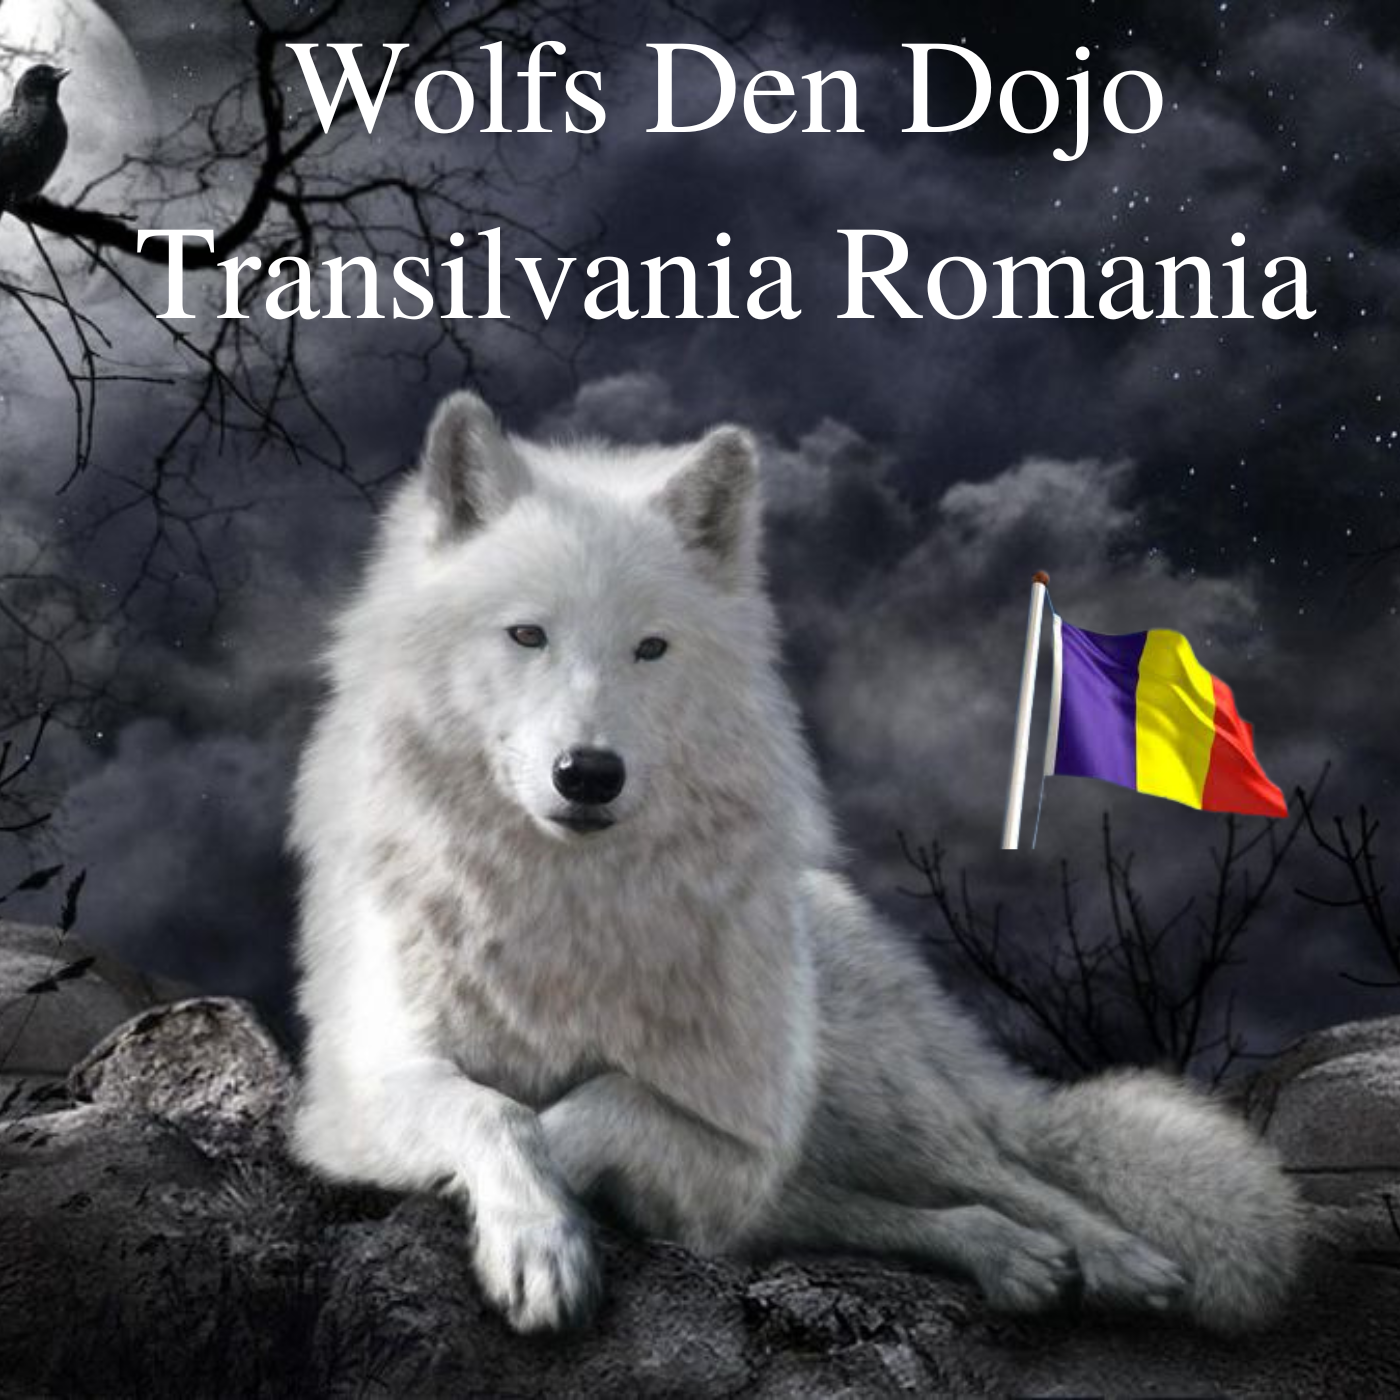 Wolf's Den Dojo Romania